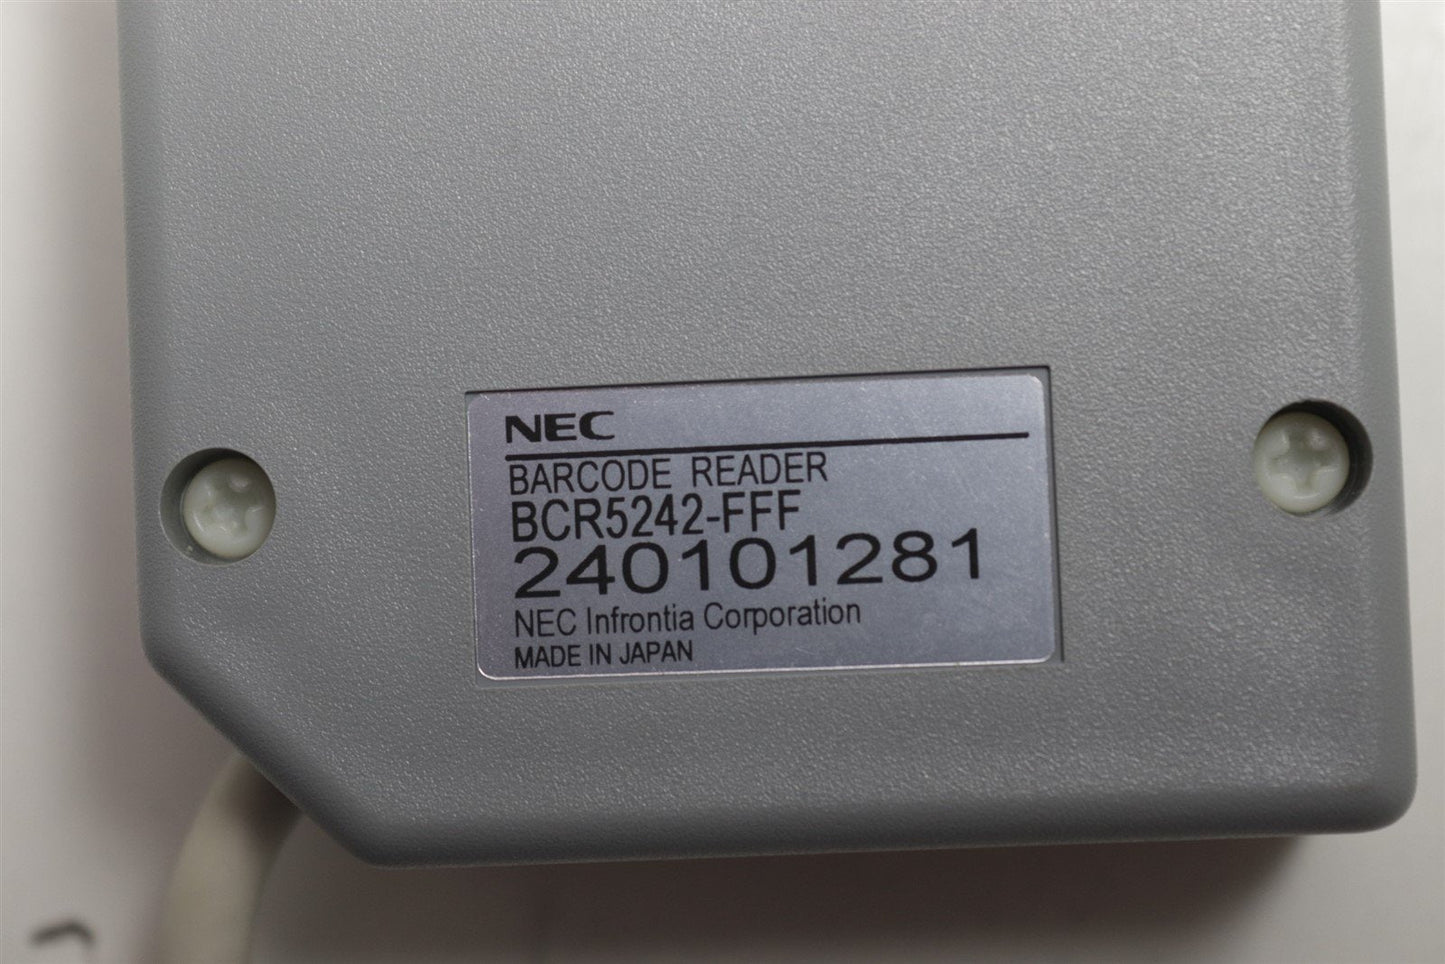 NEC Barcode Reader BCR5242-FFF 852N0025F